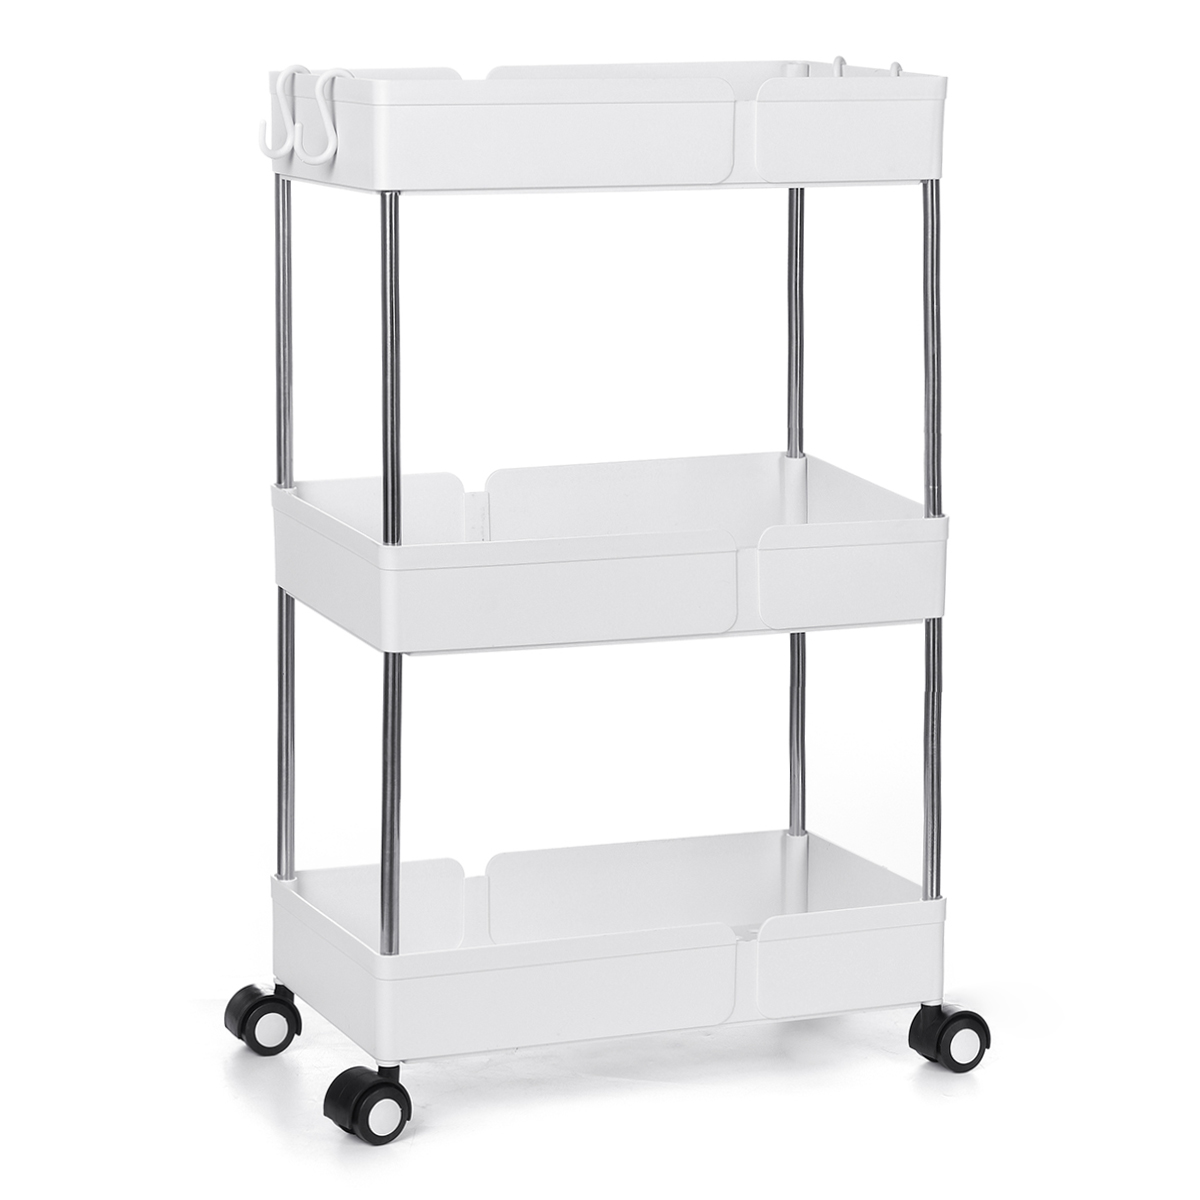 234-Rolling-Trolley-Storage-Holder-Rack-Organiser-With-Wheels-For-Kitchen-Bathroom-Office-1827511-12